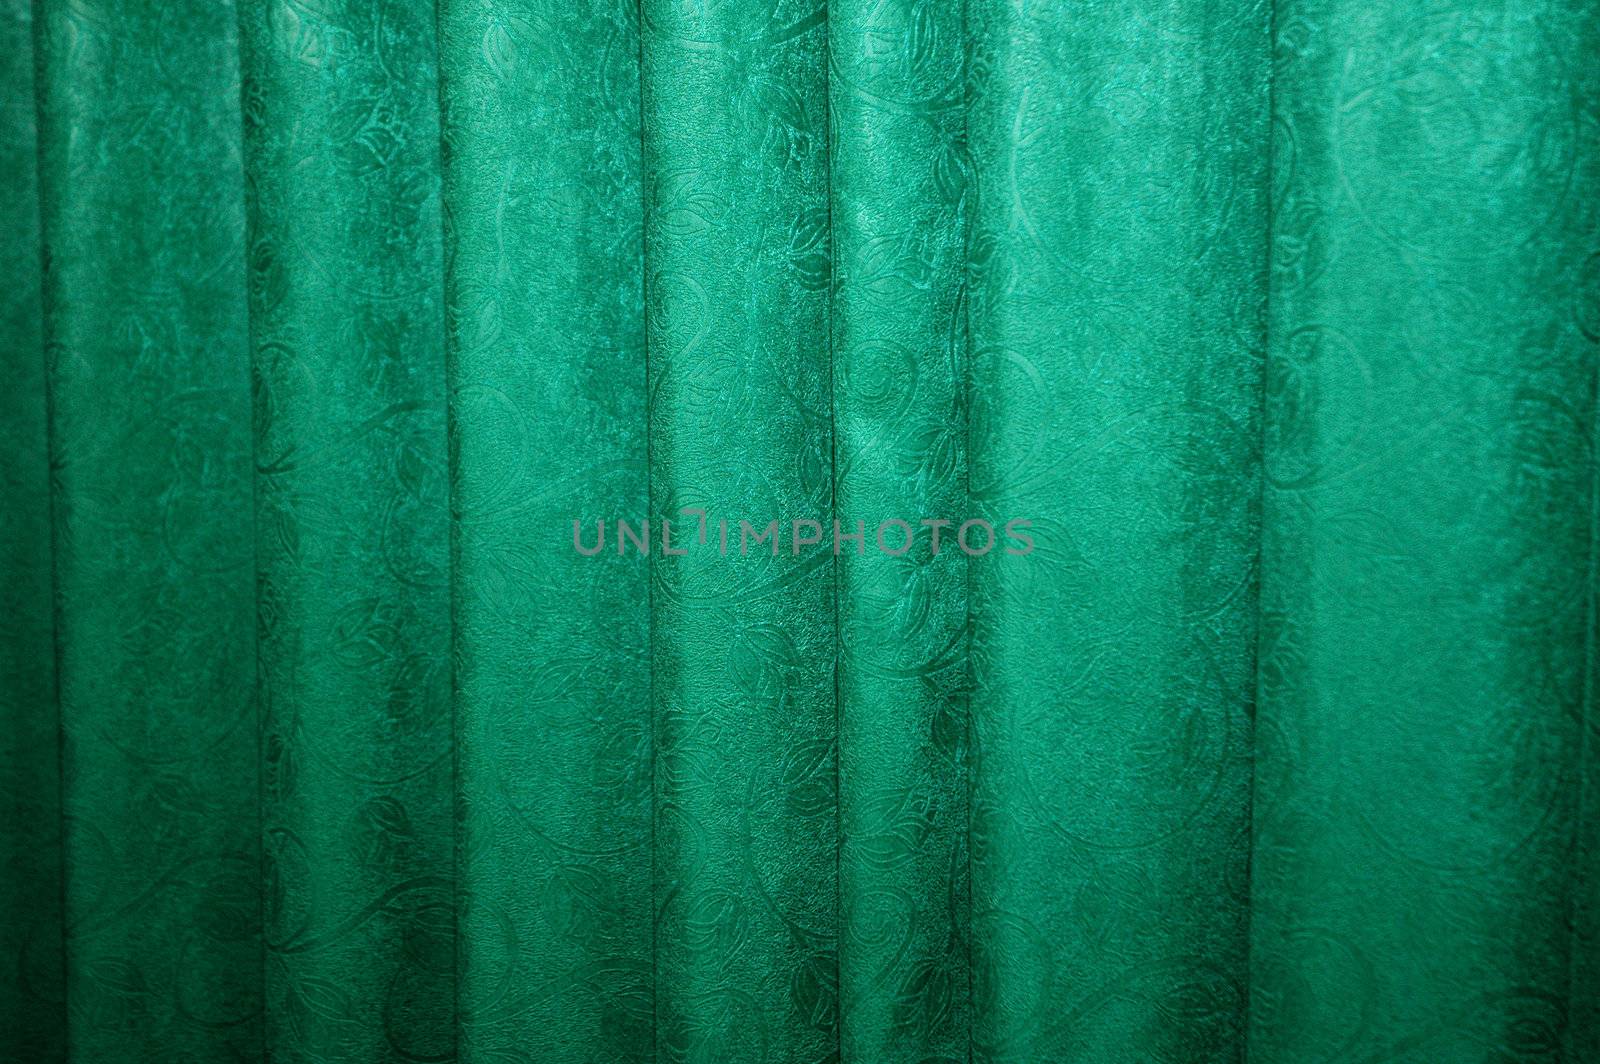 flower motif on a green curtain by antonihalim